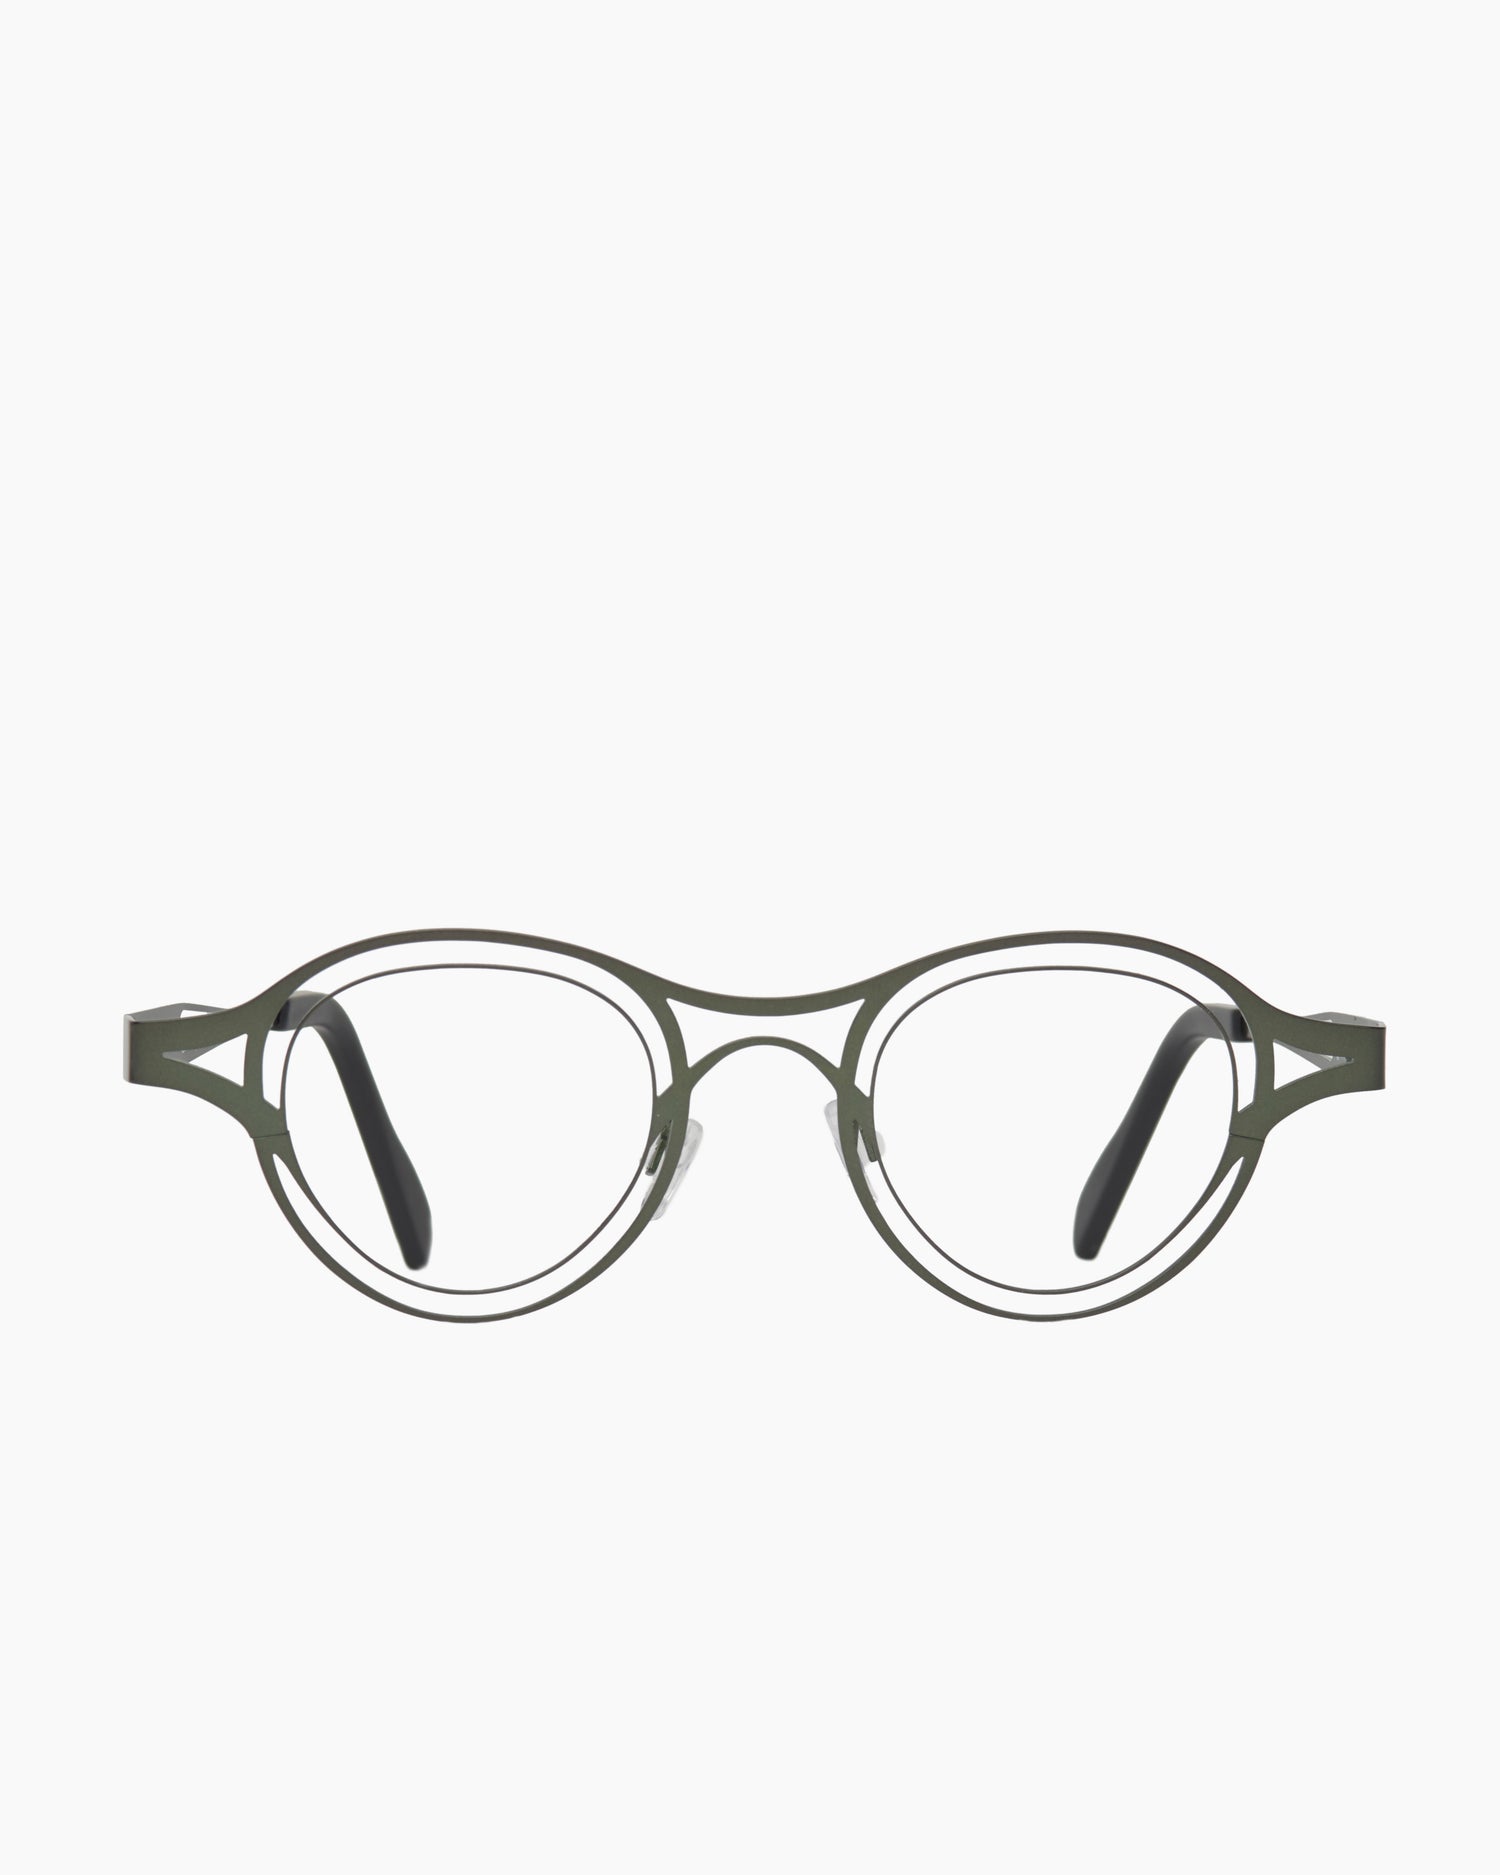 Theo - Tarifa - 508 | Bar à lunettes:  Marie-Sophie Dion